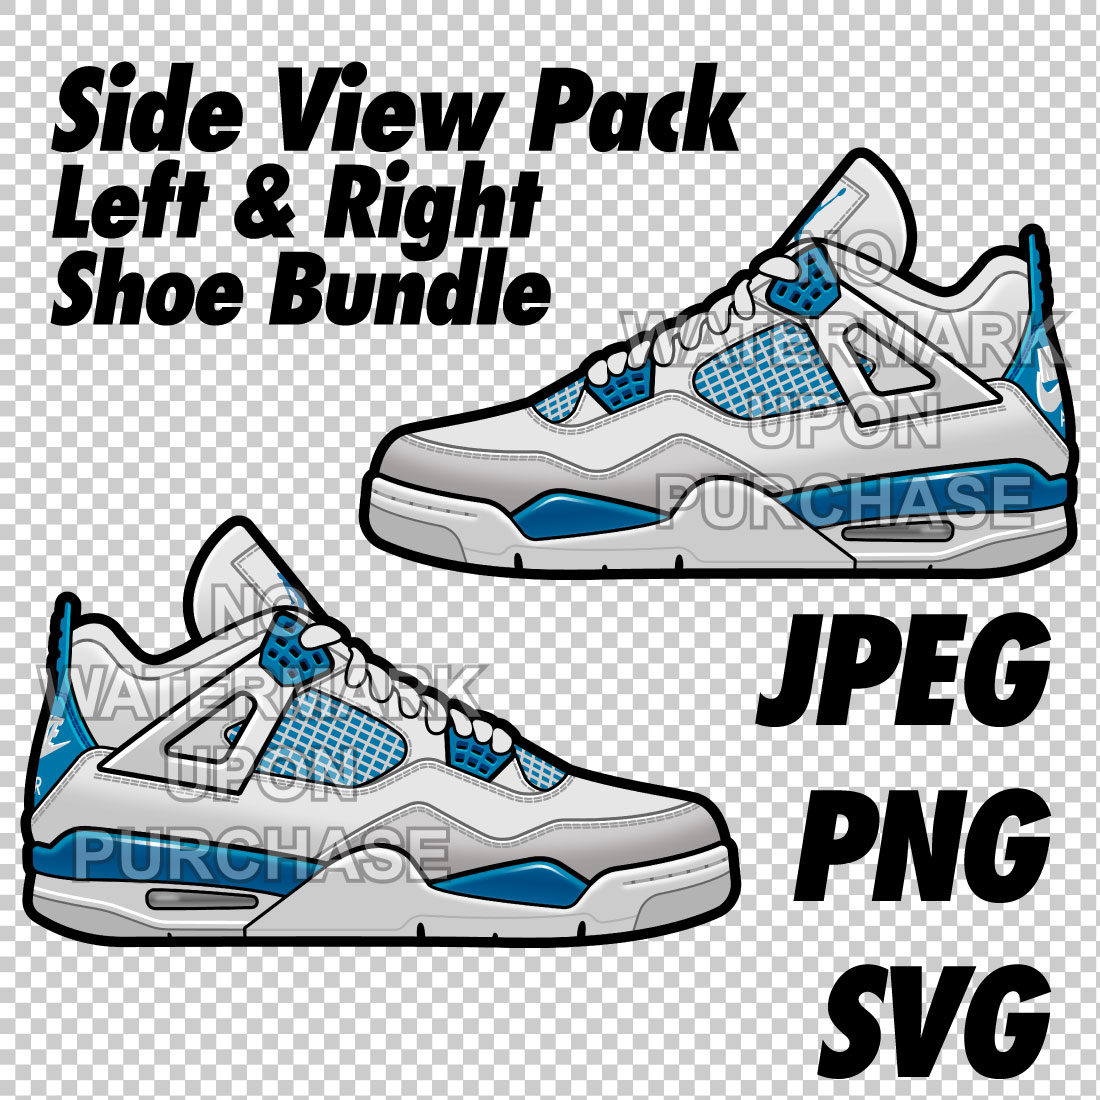 Side View Pack Air Jordan 4 Military Blue JPEG PNG SVG digital sneaker art cover image.